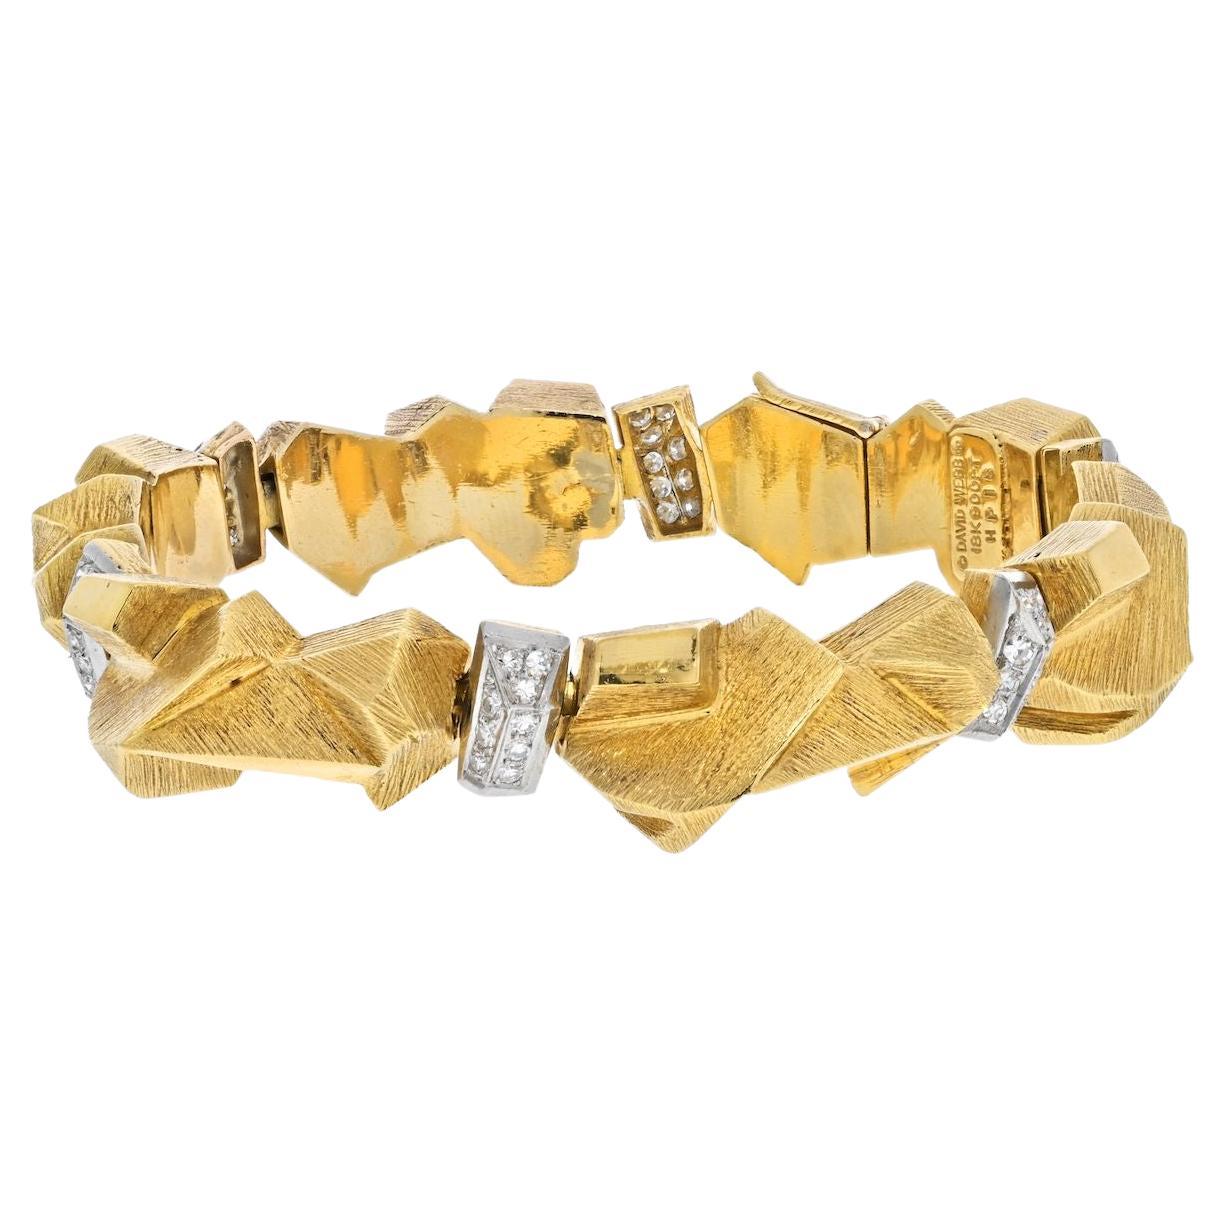 David Webb 18K Yellow Gold Nugget Diamond Articulated Bracelet